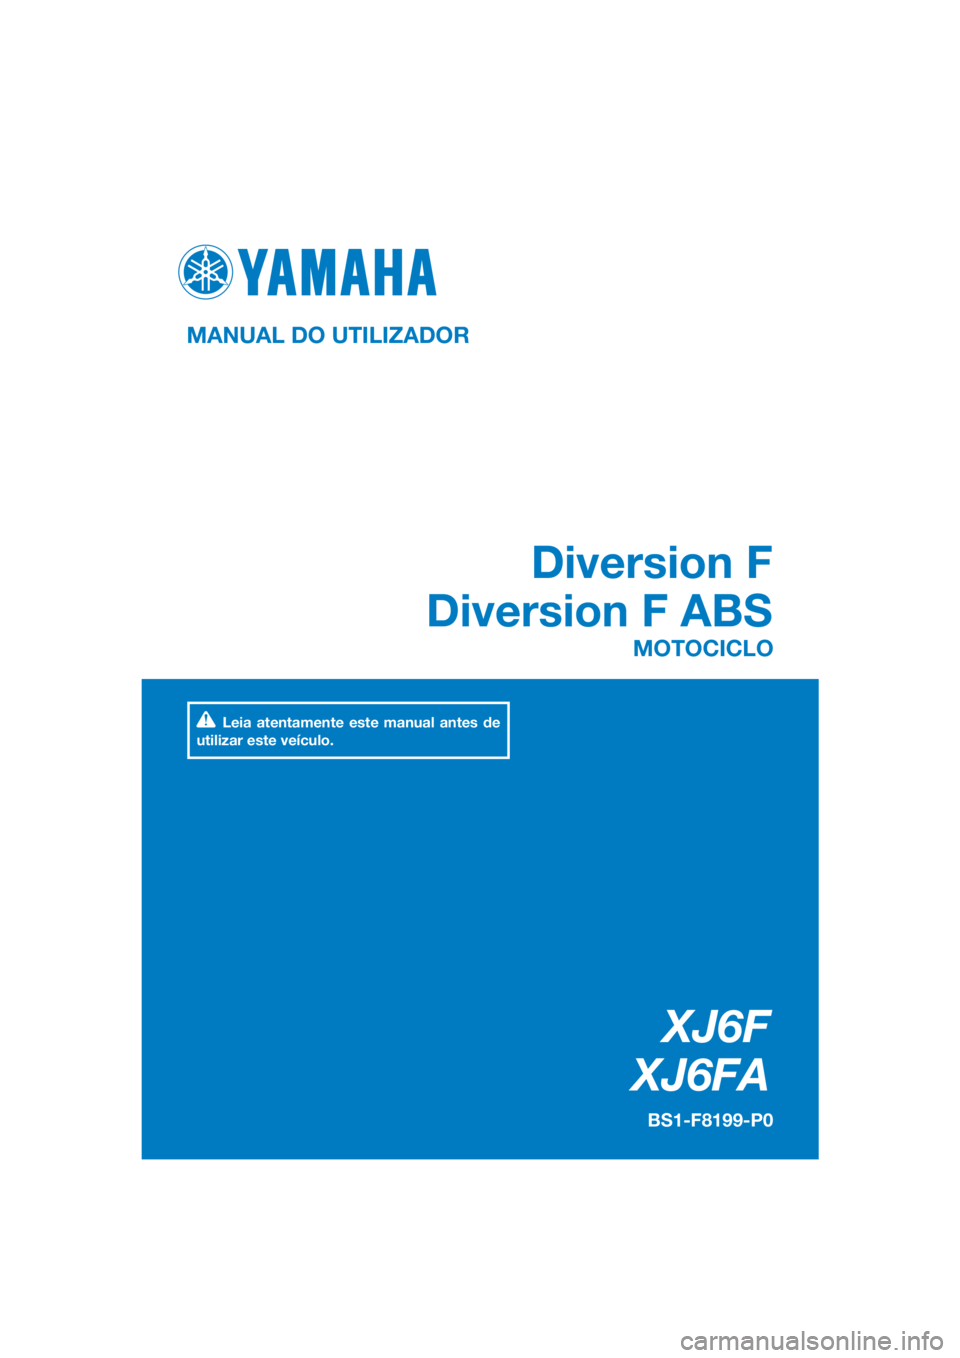 YAMAHA XJ6F 2016  Manual de utilização (in Portuguese) DIC183
XJ6F
XJ6FA
Diversion F
Diversion F ABS
MANUAL DO UTILIZADOR
BS1-F8199-P0
MOTOCICLO
Leia atentamente este manual antes de 
utilizar este veículo.
[Portuguese  (P)] 